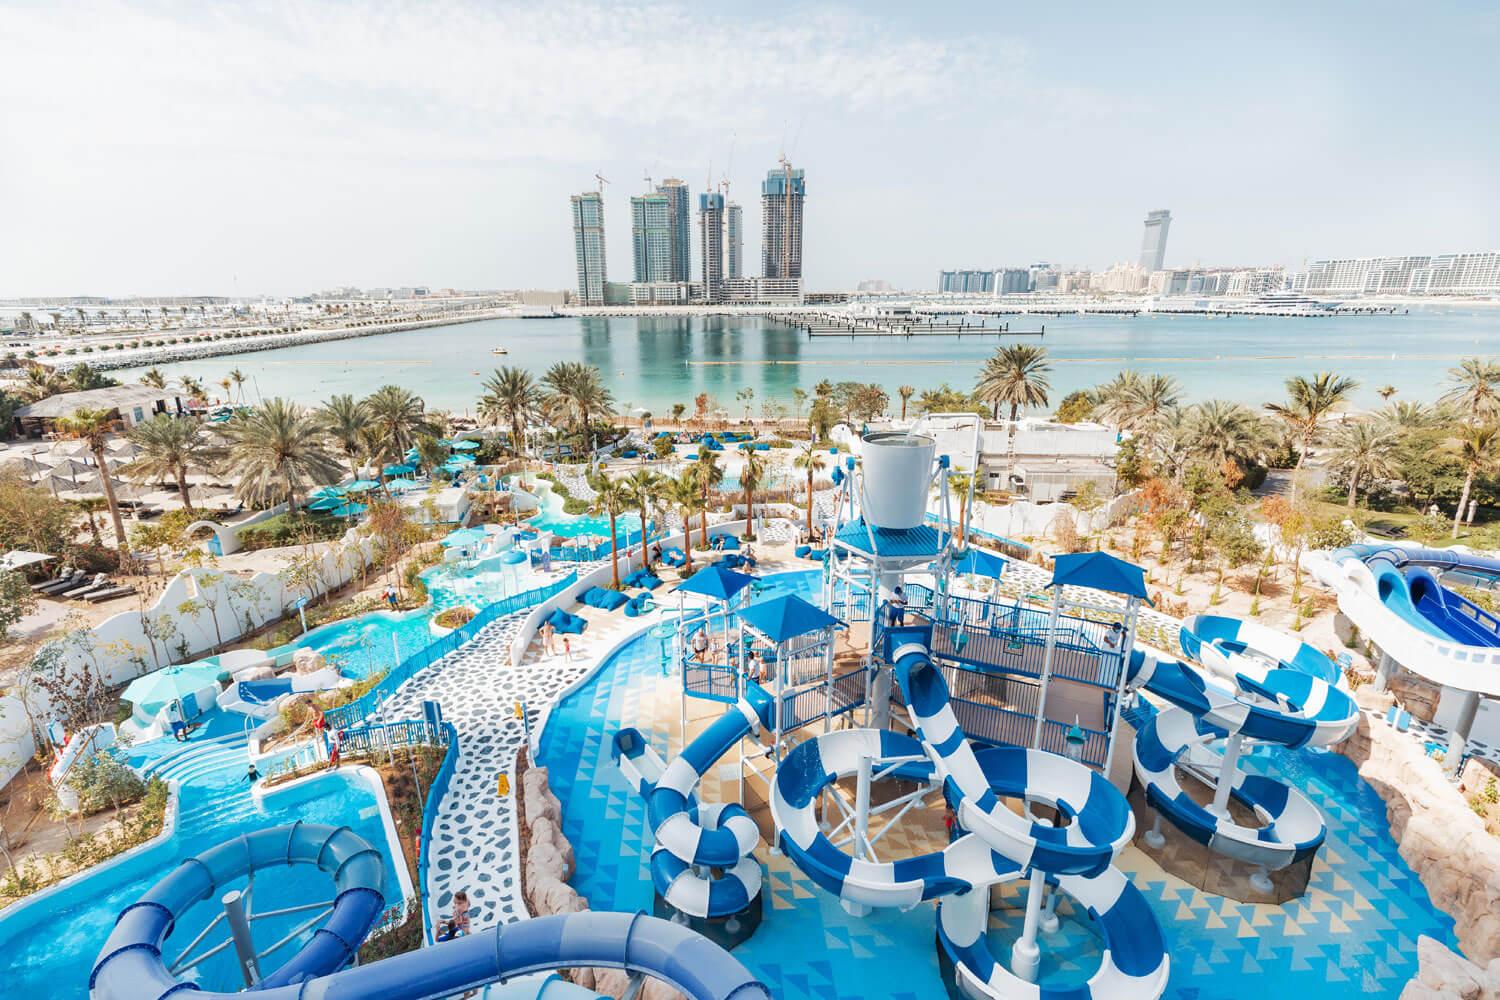 The Westin Dubai Mina Seyahi Beach Resort and Marina Jungle Bay Waterpark